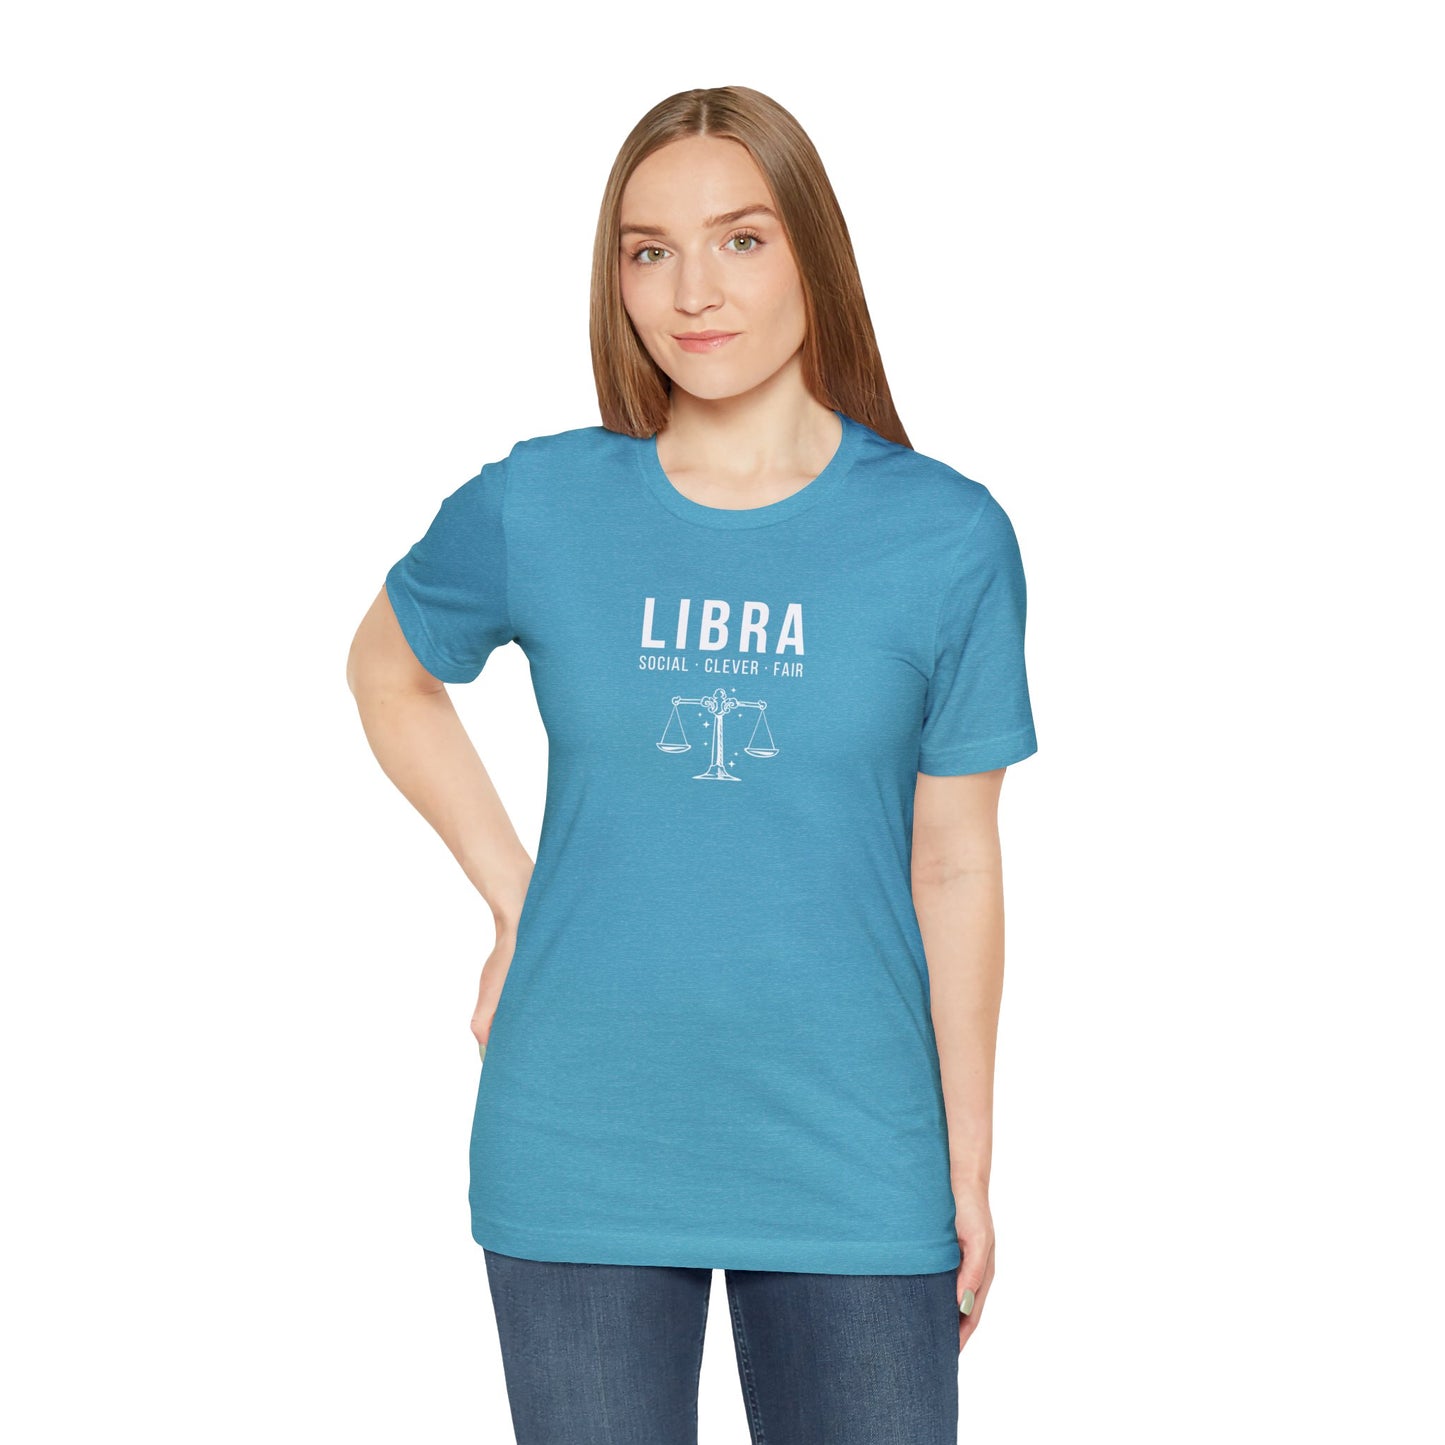 Libra Shirt Unisex Short Sleeve Tee